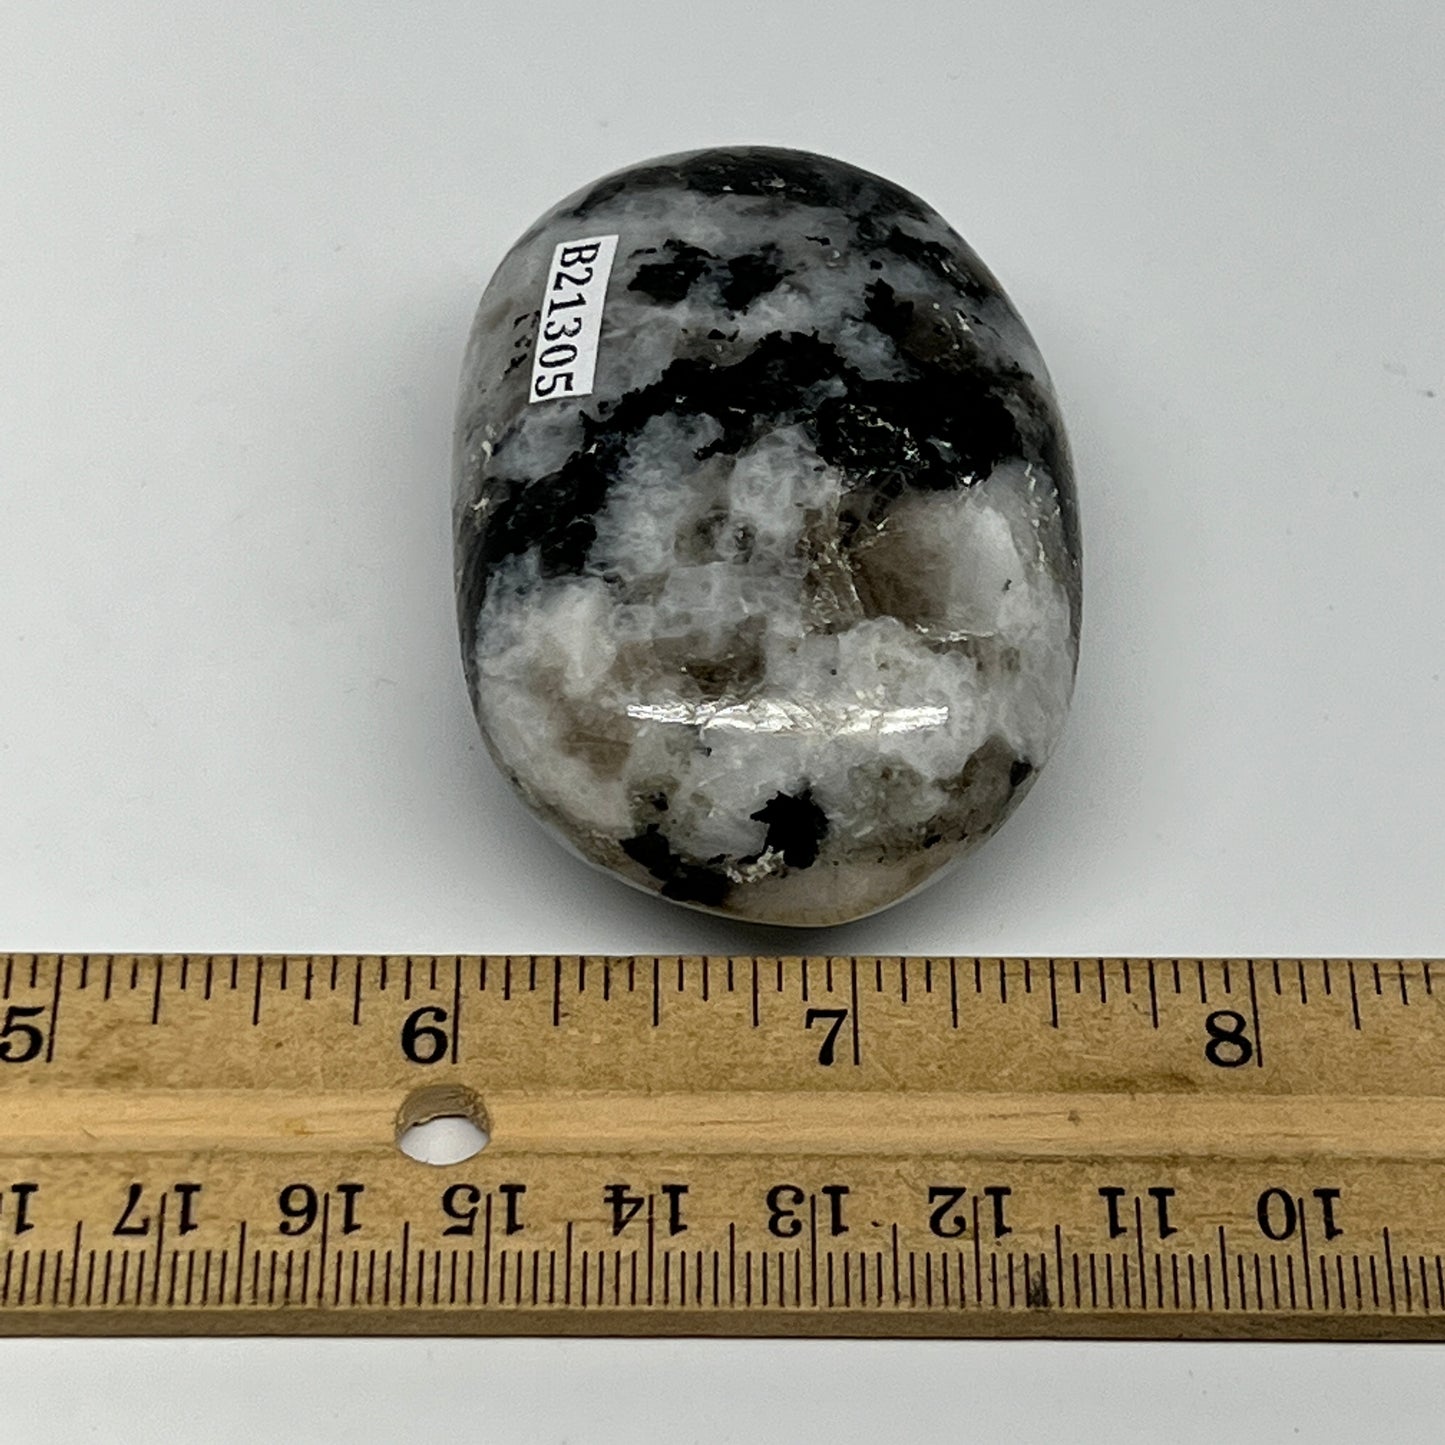 108.5g,2.4"x1.7"x1.1", Rainbow Moonstone Palm-Stone Polished from India, B21305